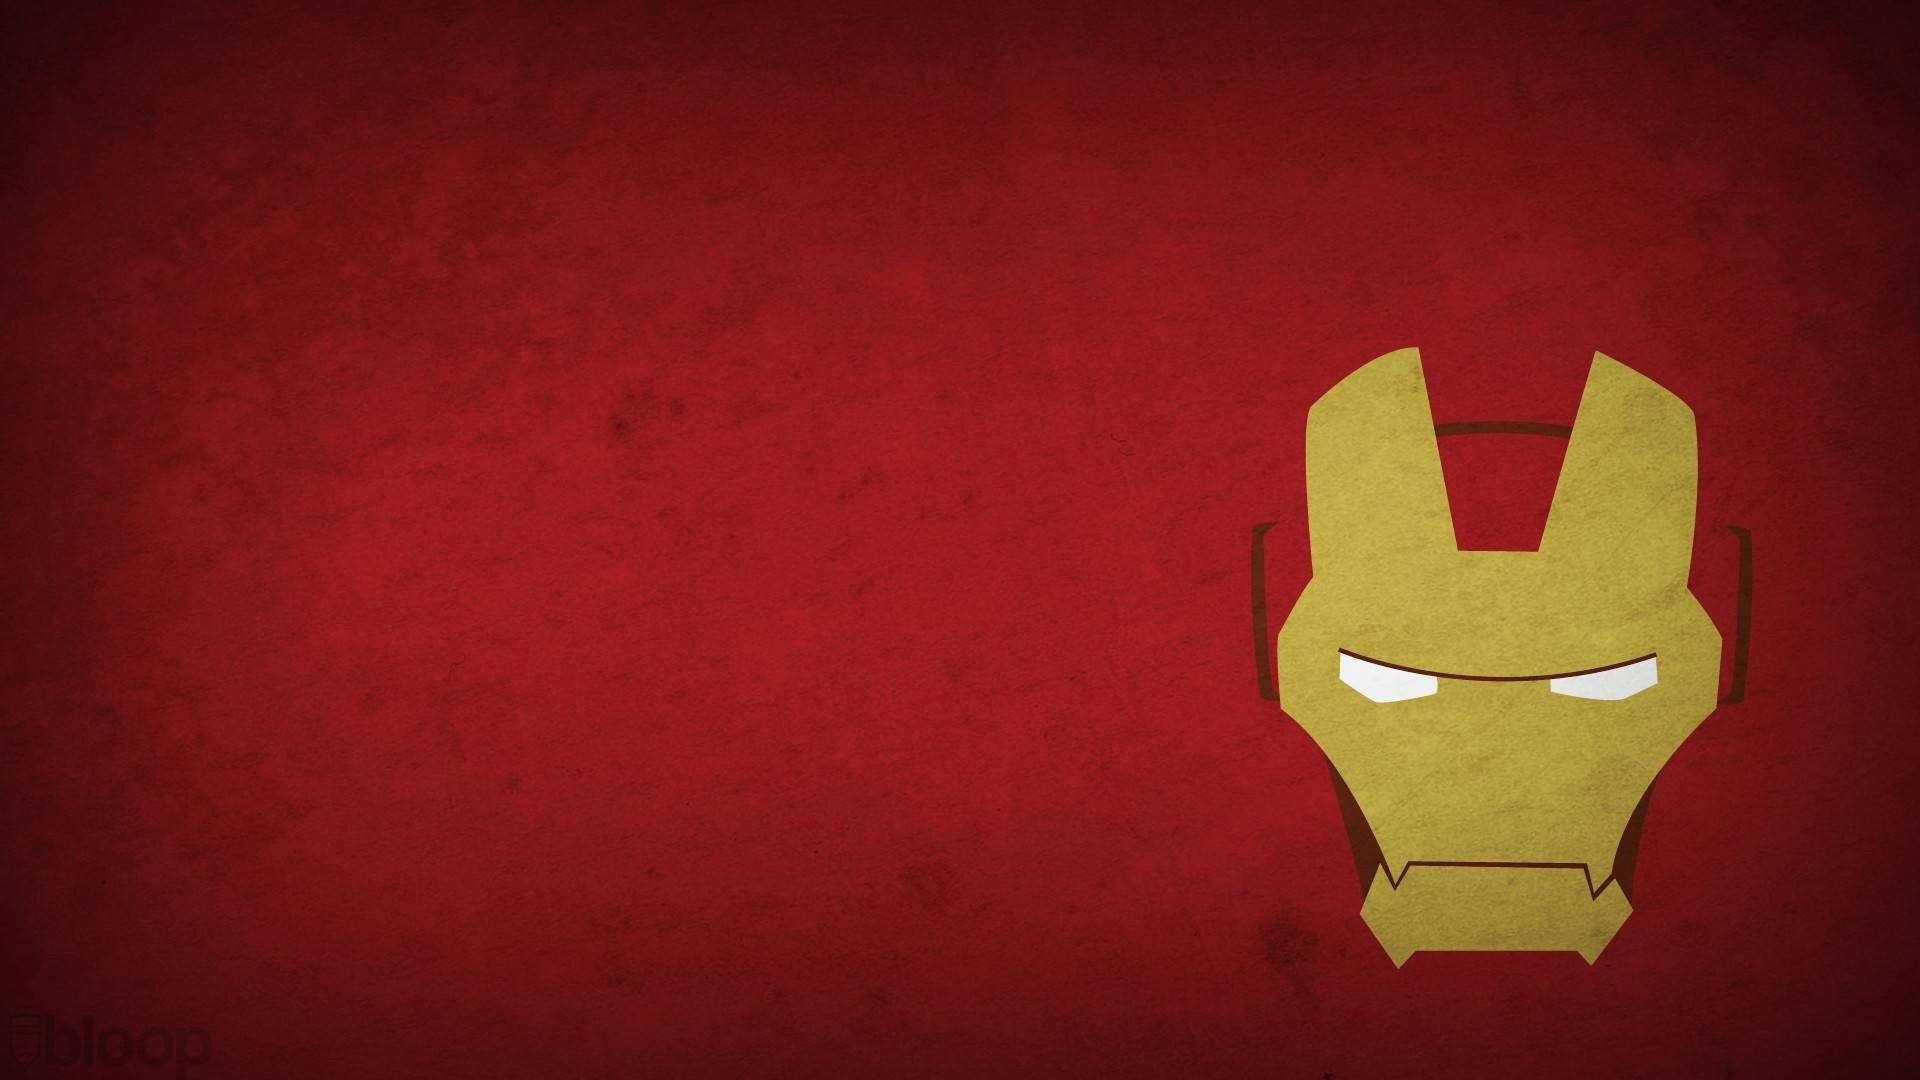 Iron Man 4k Wallpapers  Top Ultra 4k Iron Man Backgrounds Download